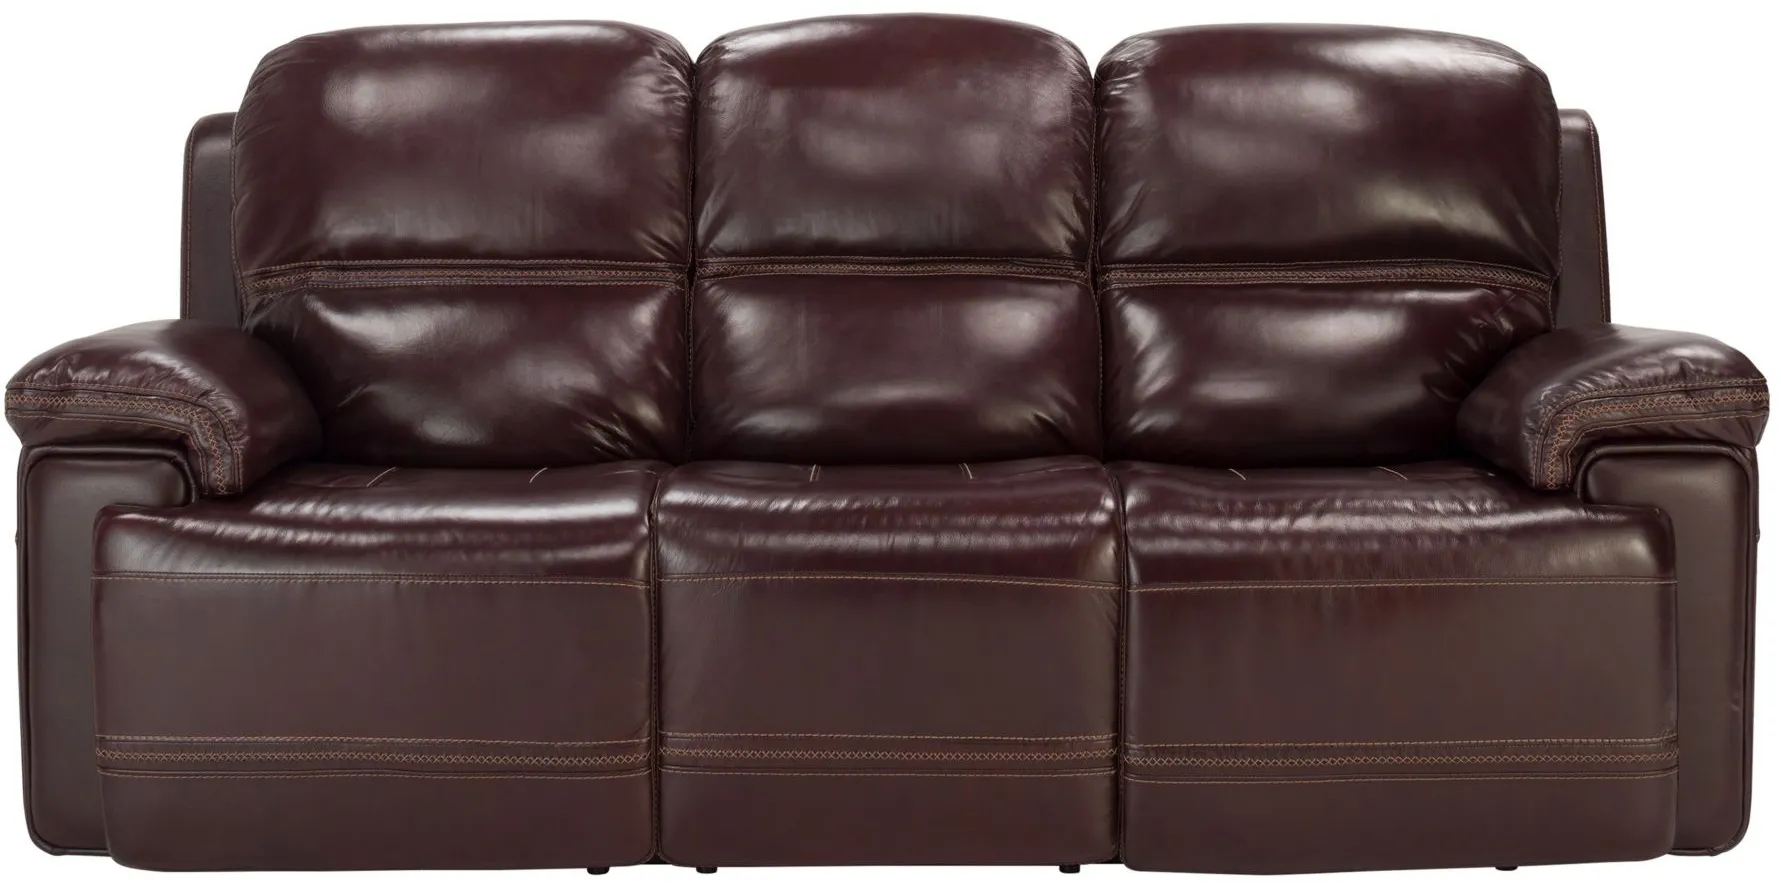 Harding Power Sofa w/Power Headrest in Brown by Davis Intl.